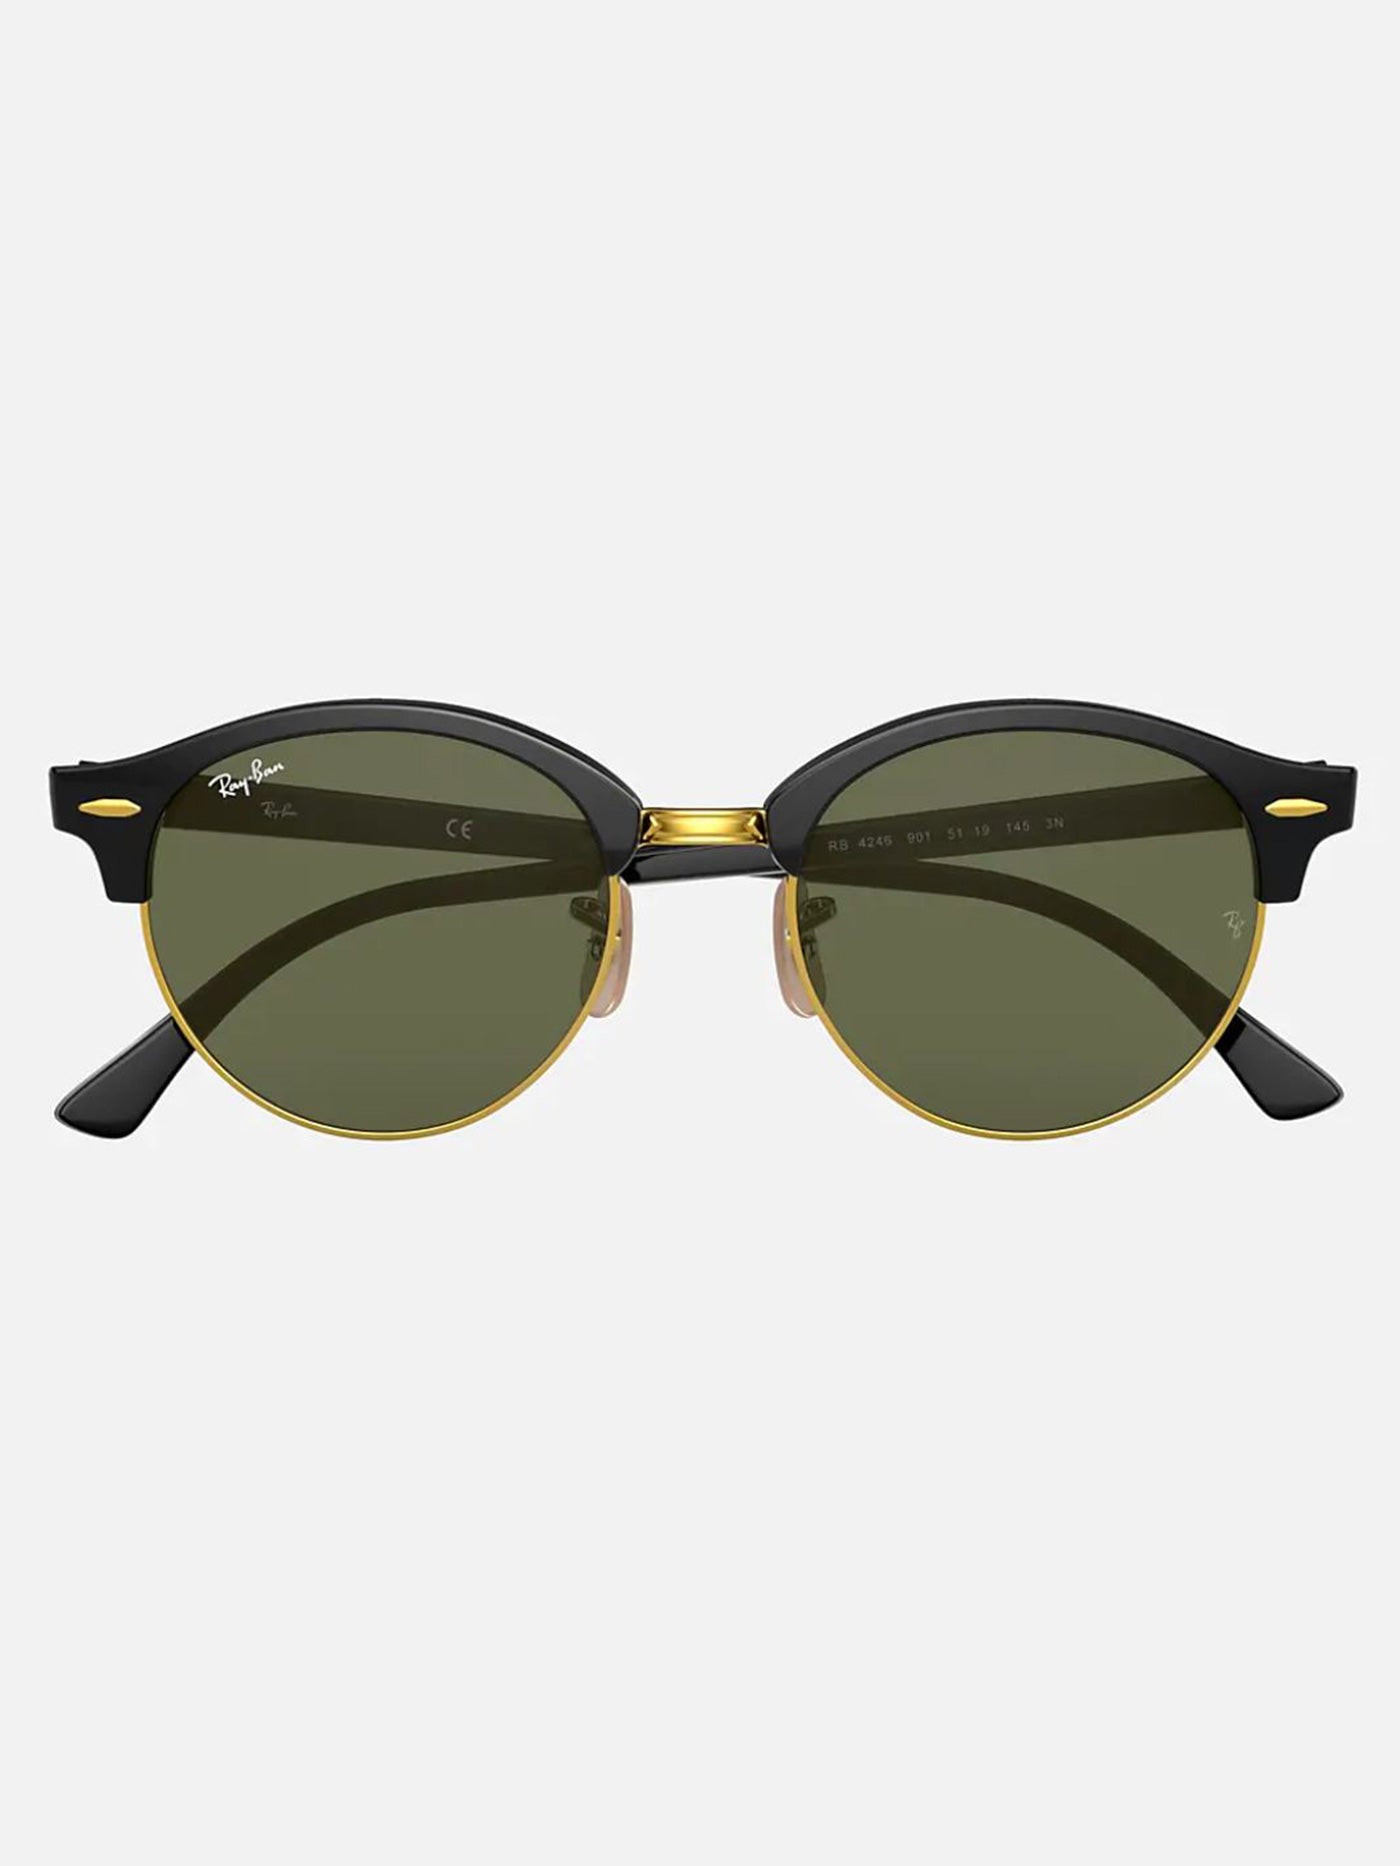 Ray-Ban Clubround Classic Sunglasses